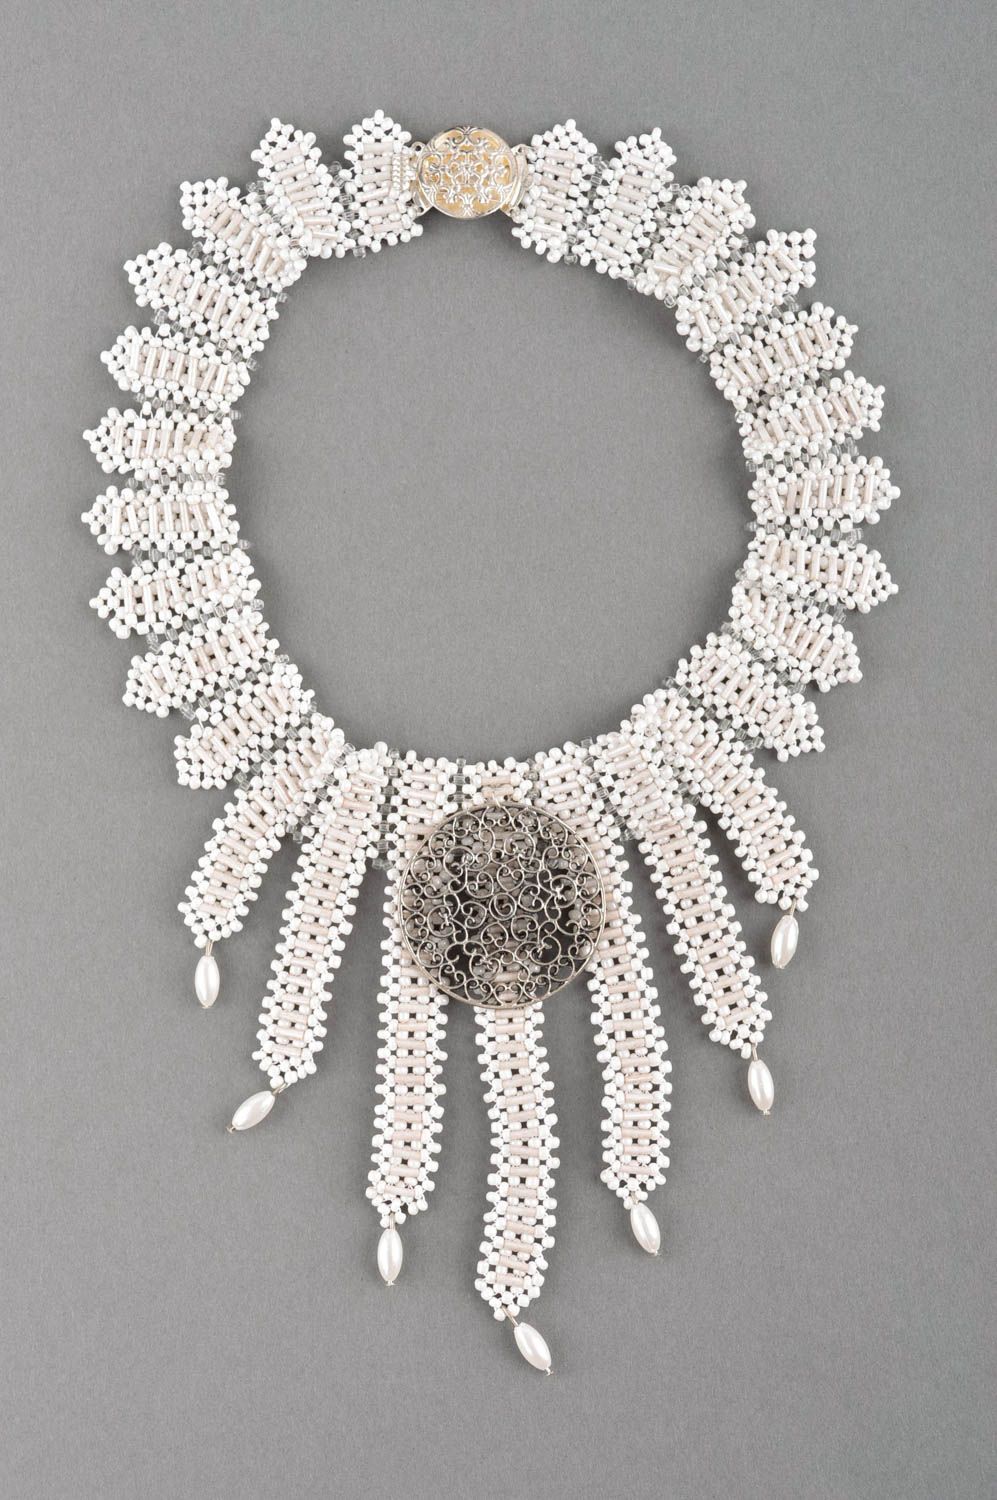 Handmade accessories designer jewelry set of 2 items unusual gift for women photo 3